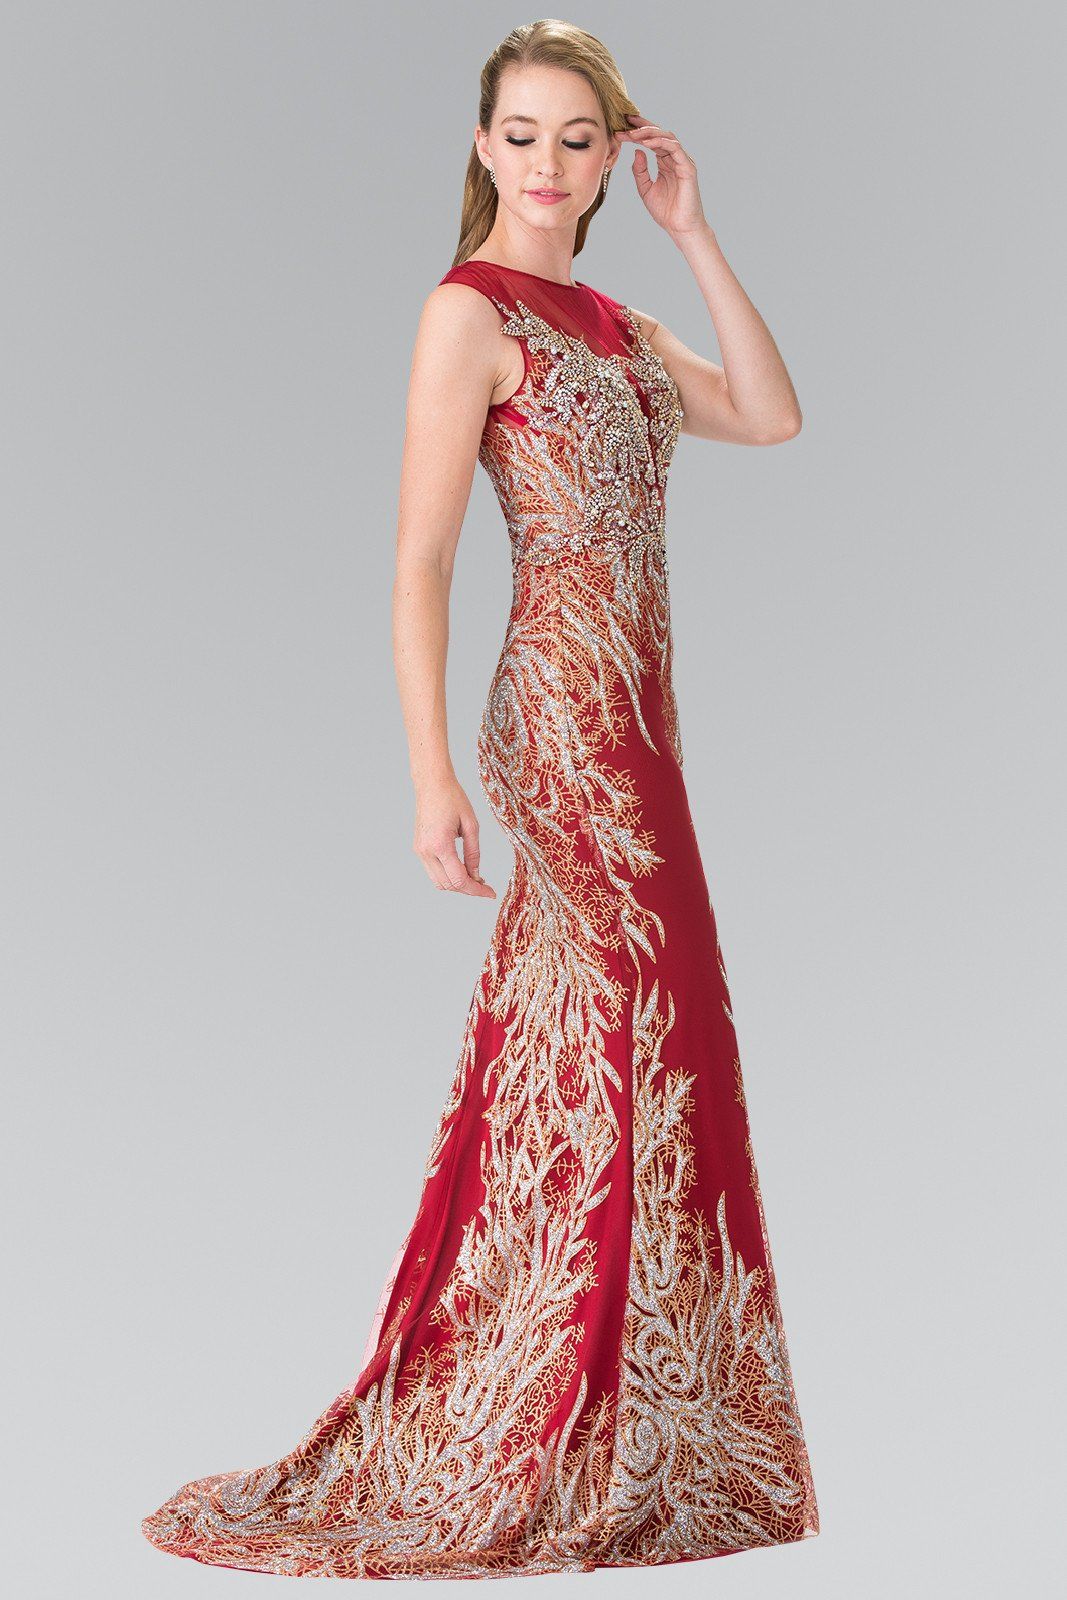 Long Sleeveless Dress with Beaded Vine Design by Elizabeth K GL2336-Long Formal Dresses-ABC Fashion